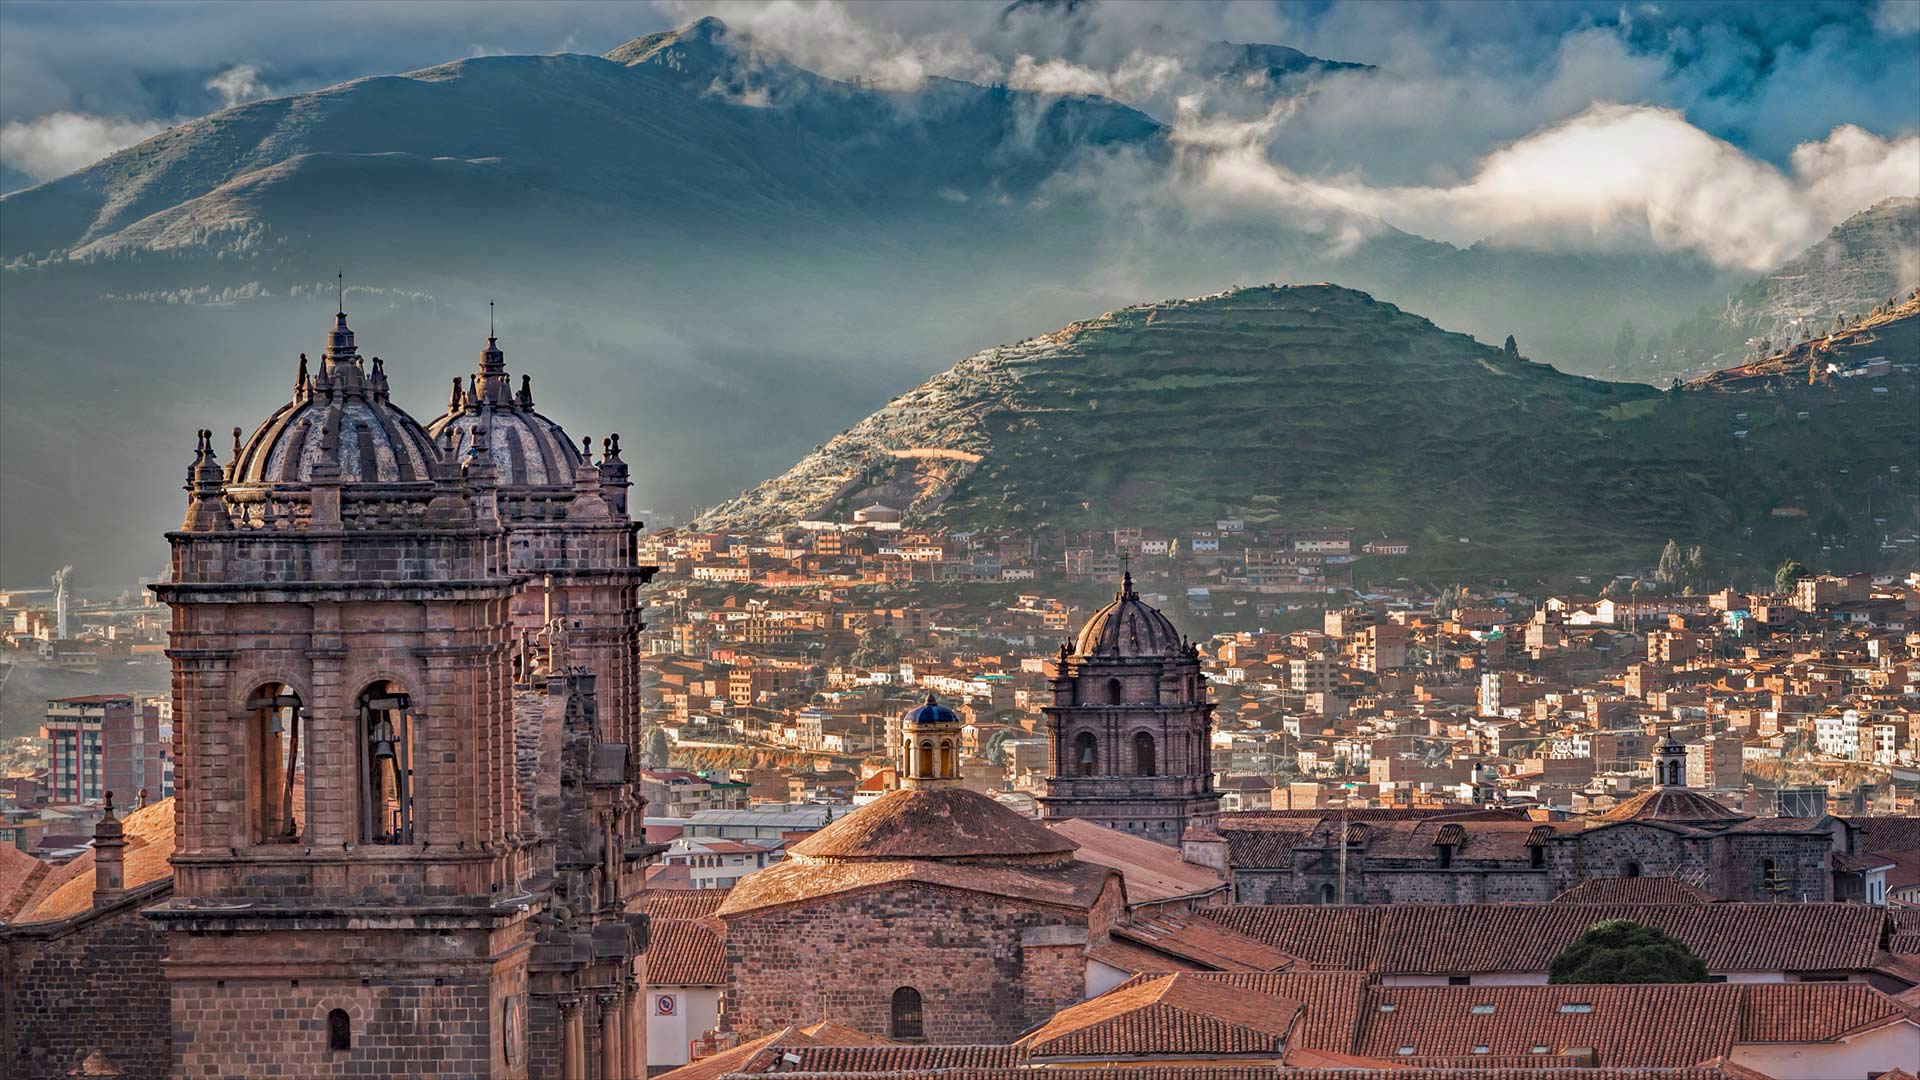 Cusco Cathedral on the Plaza de Armas, Cusco, Peru - sharptoyou/Shutterstock)